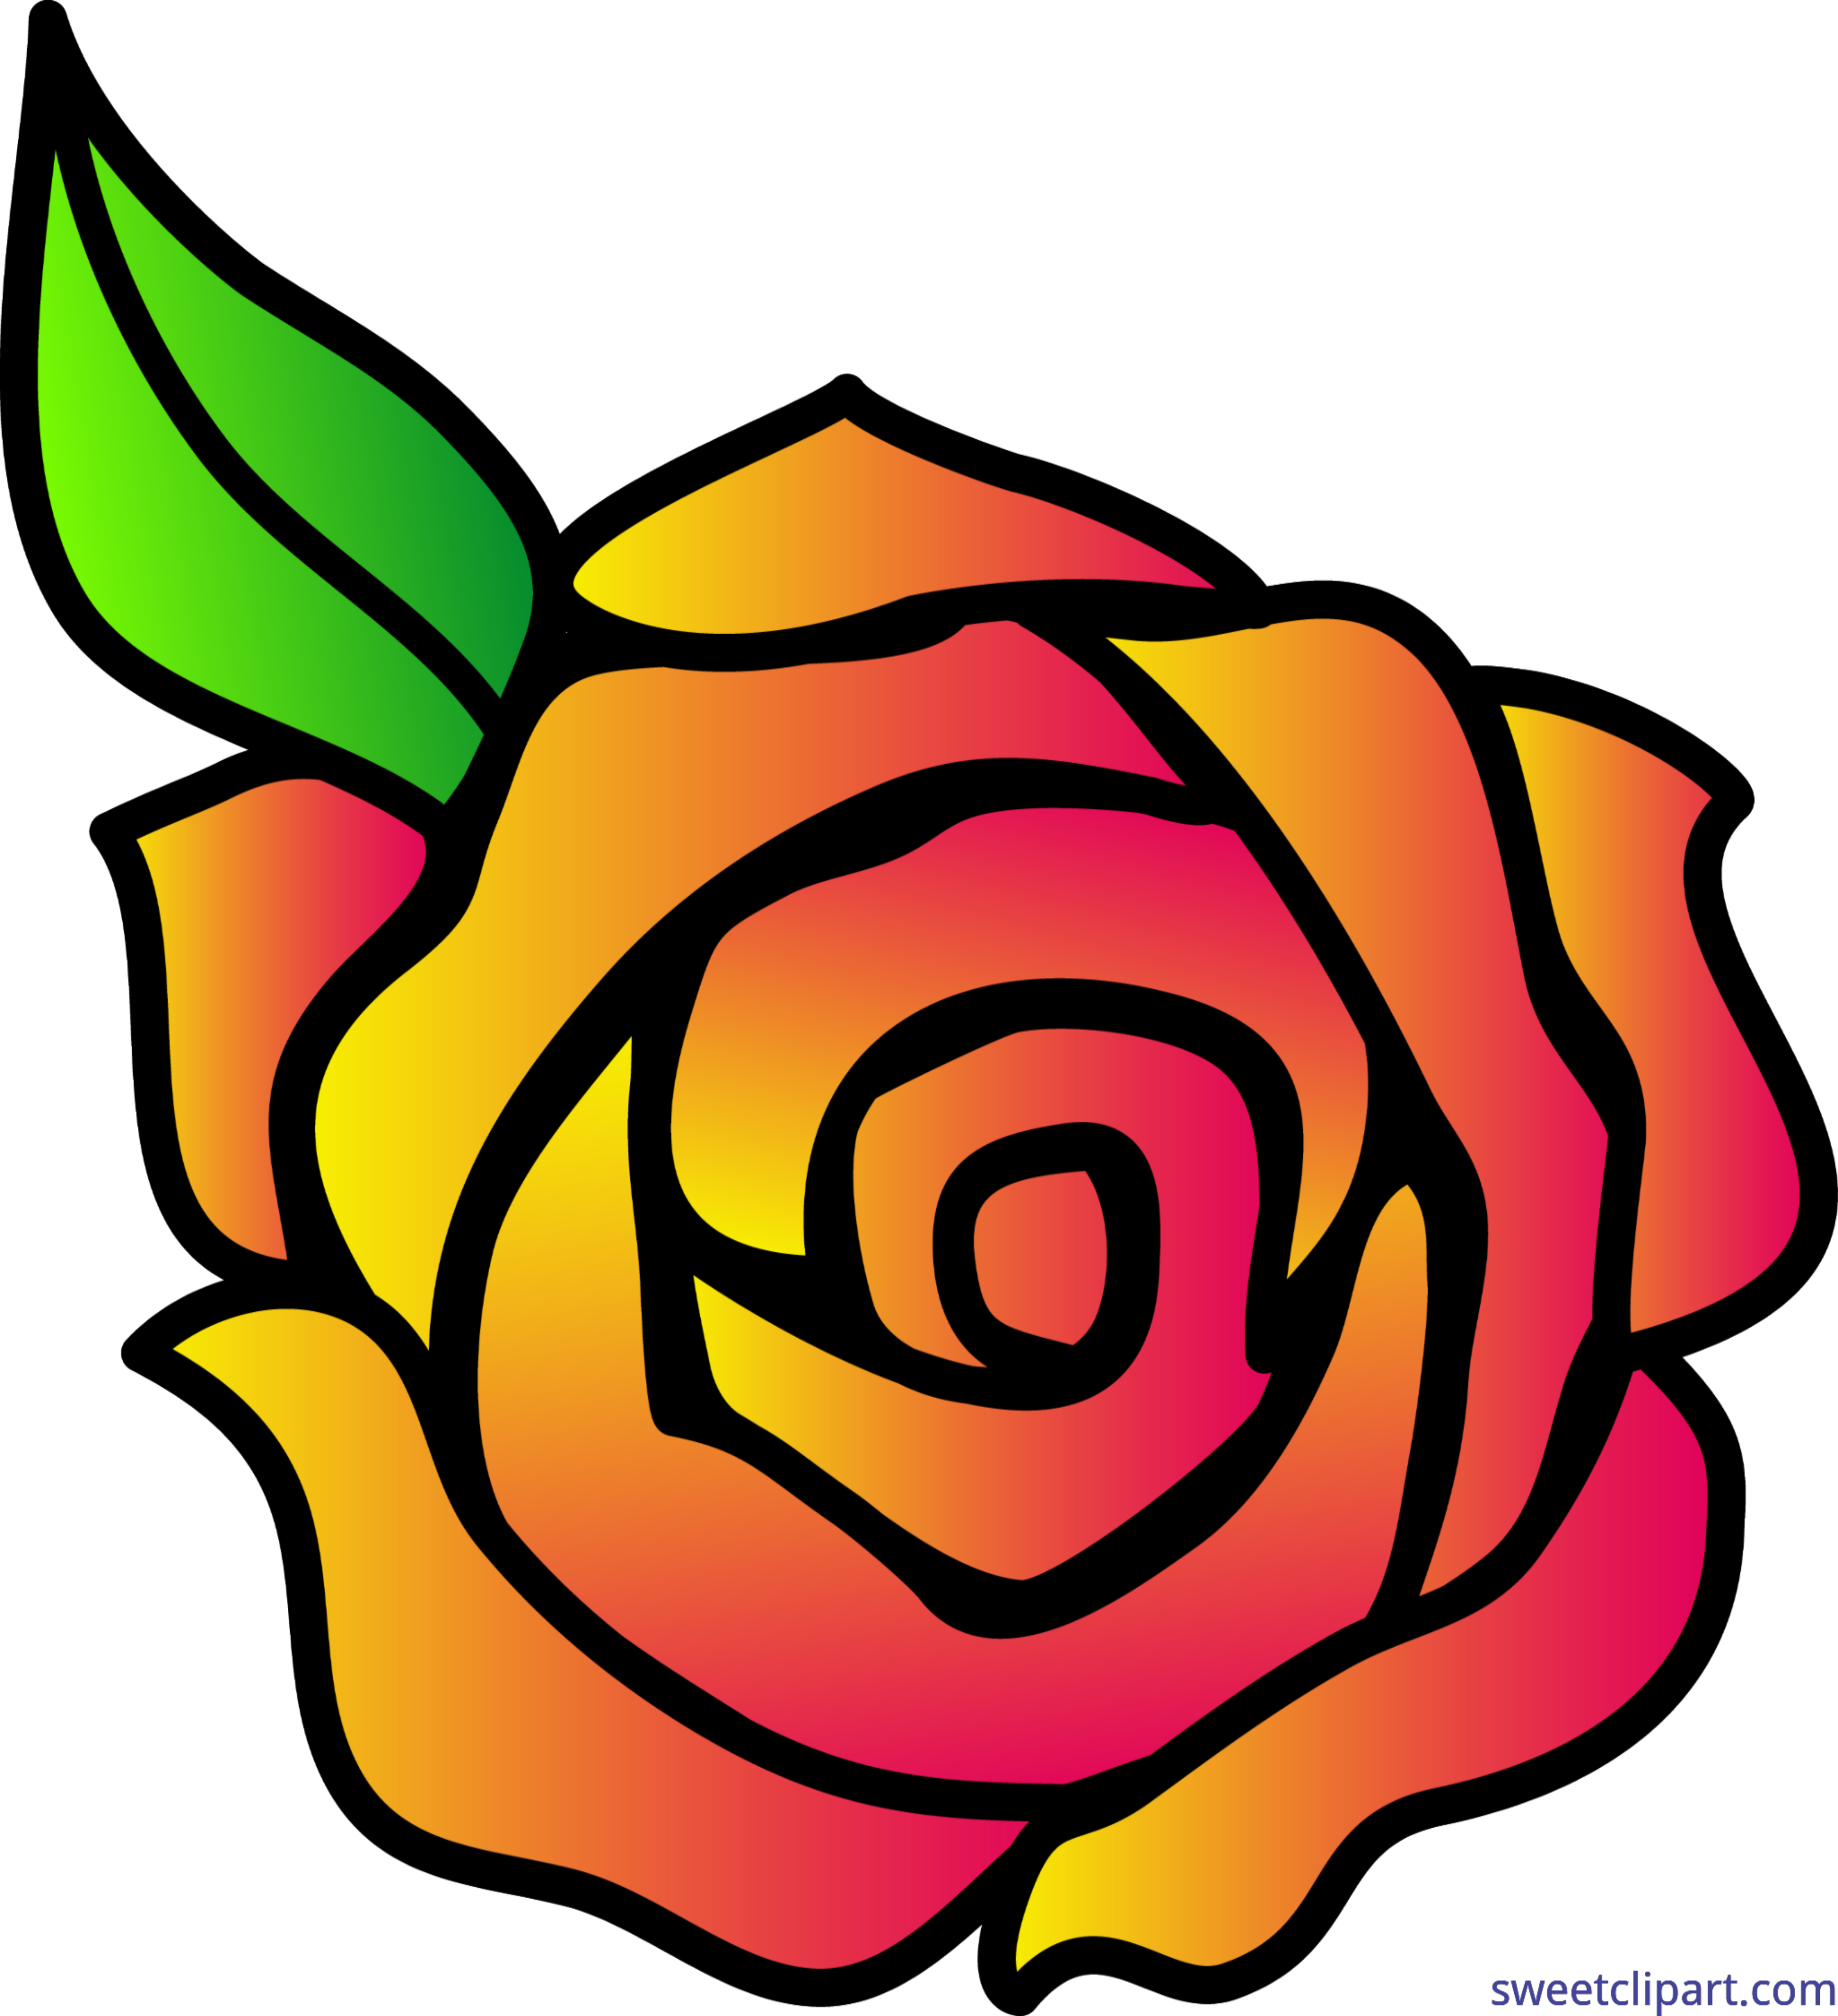 Clipart rose yellow rose. Hybrid clip art sweet